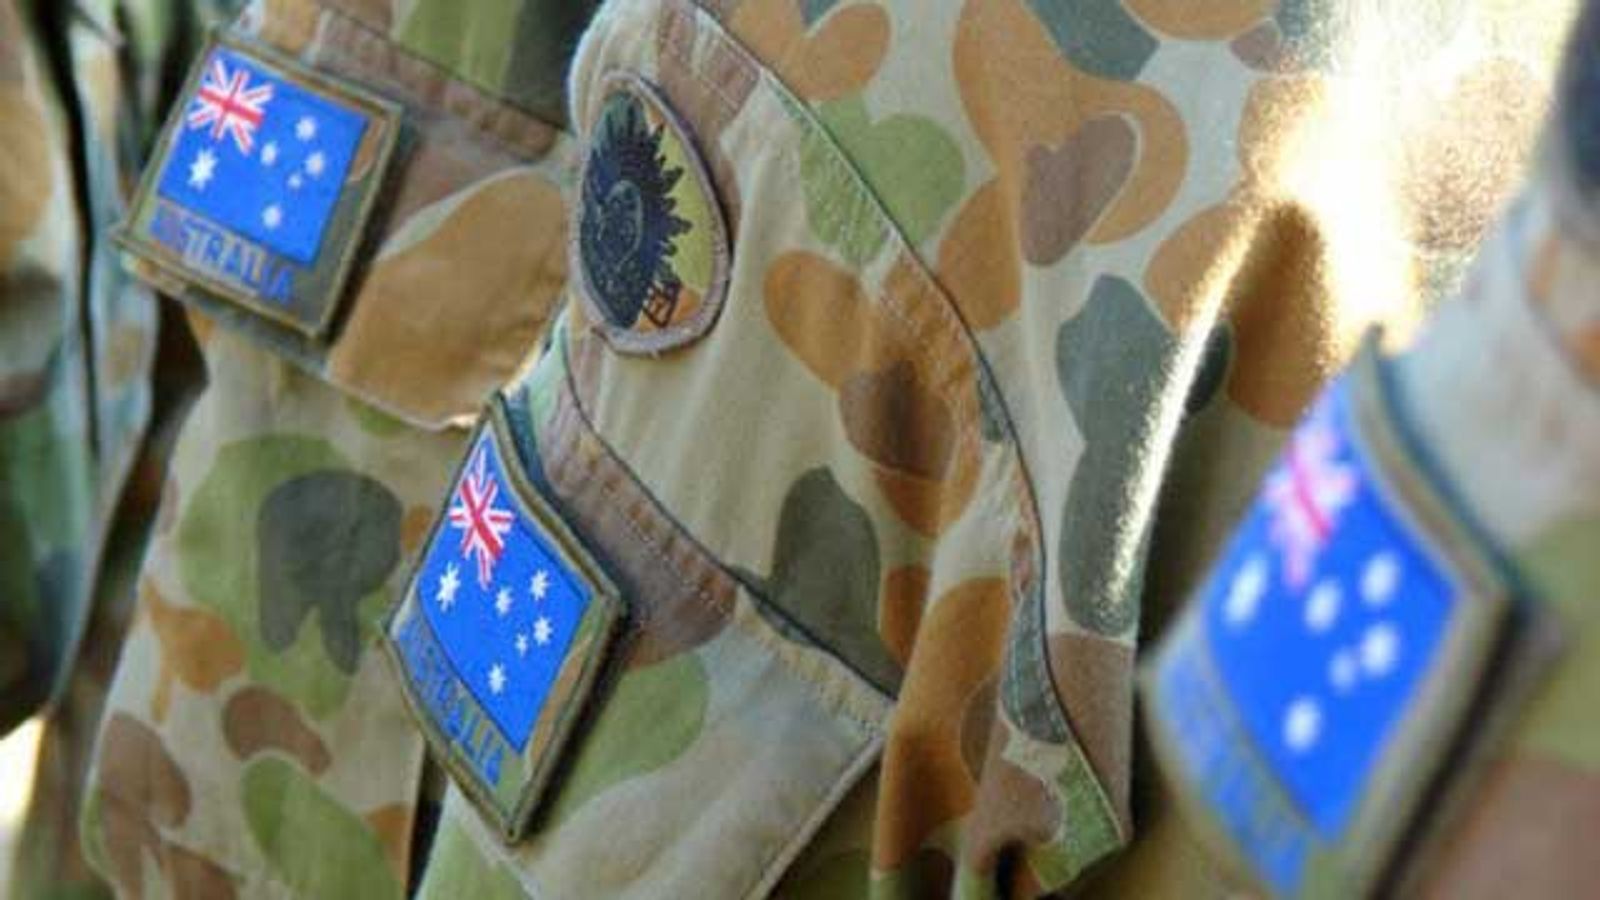 Australian Defense Force Sex Videos Revealed